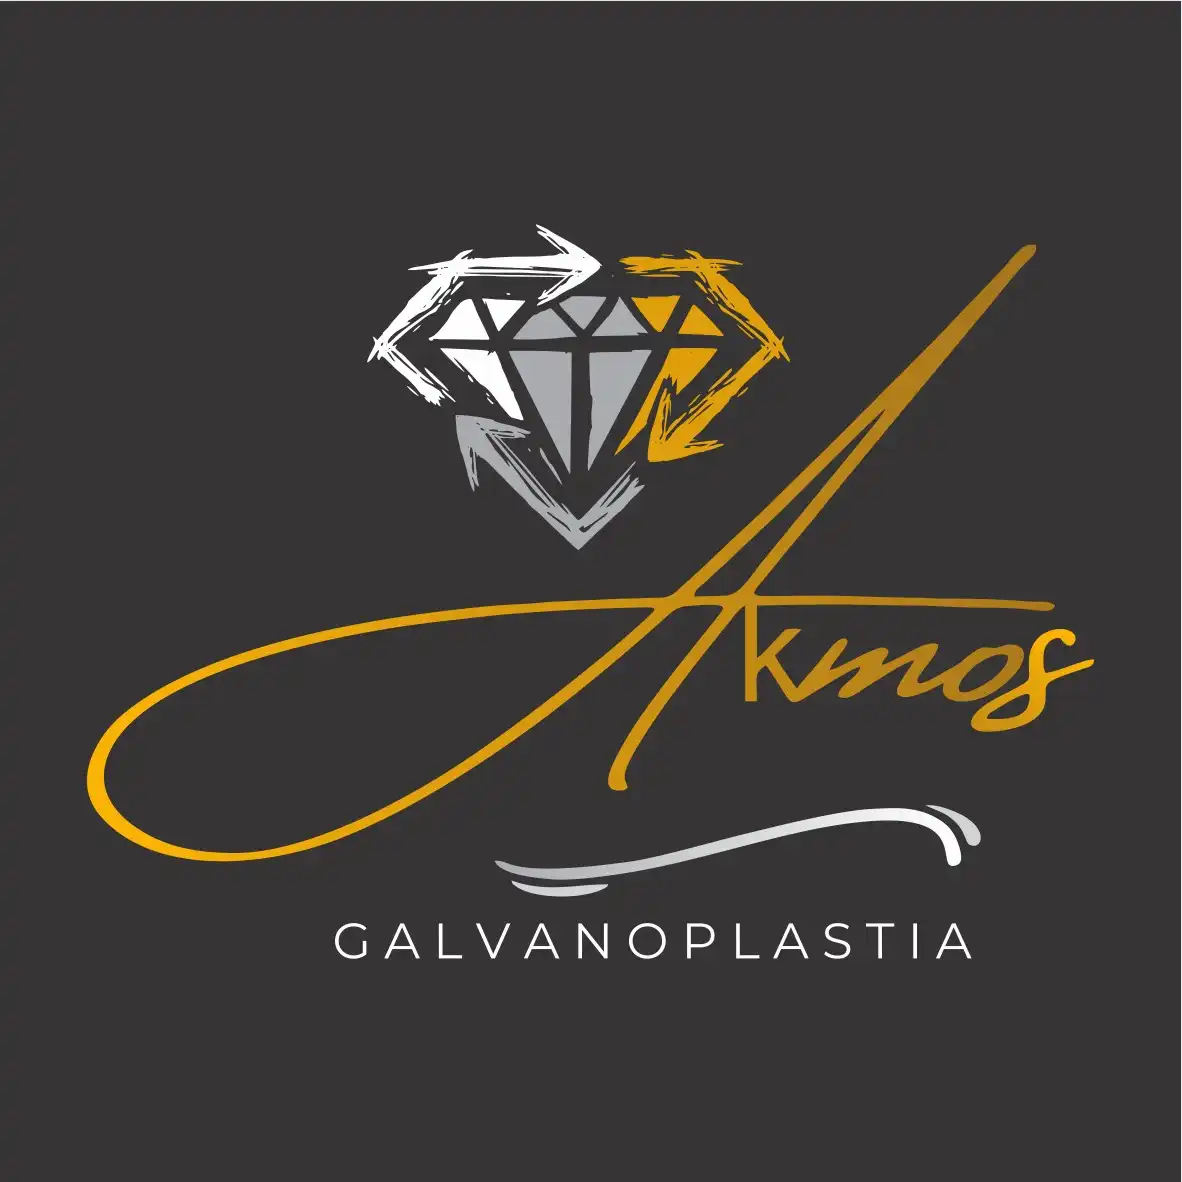 
Logotipo Logomarca Empresa de Serviços de Galvanoplastia



